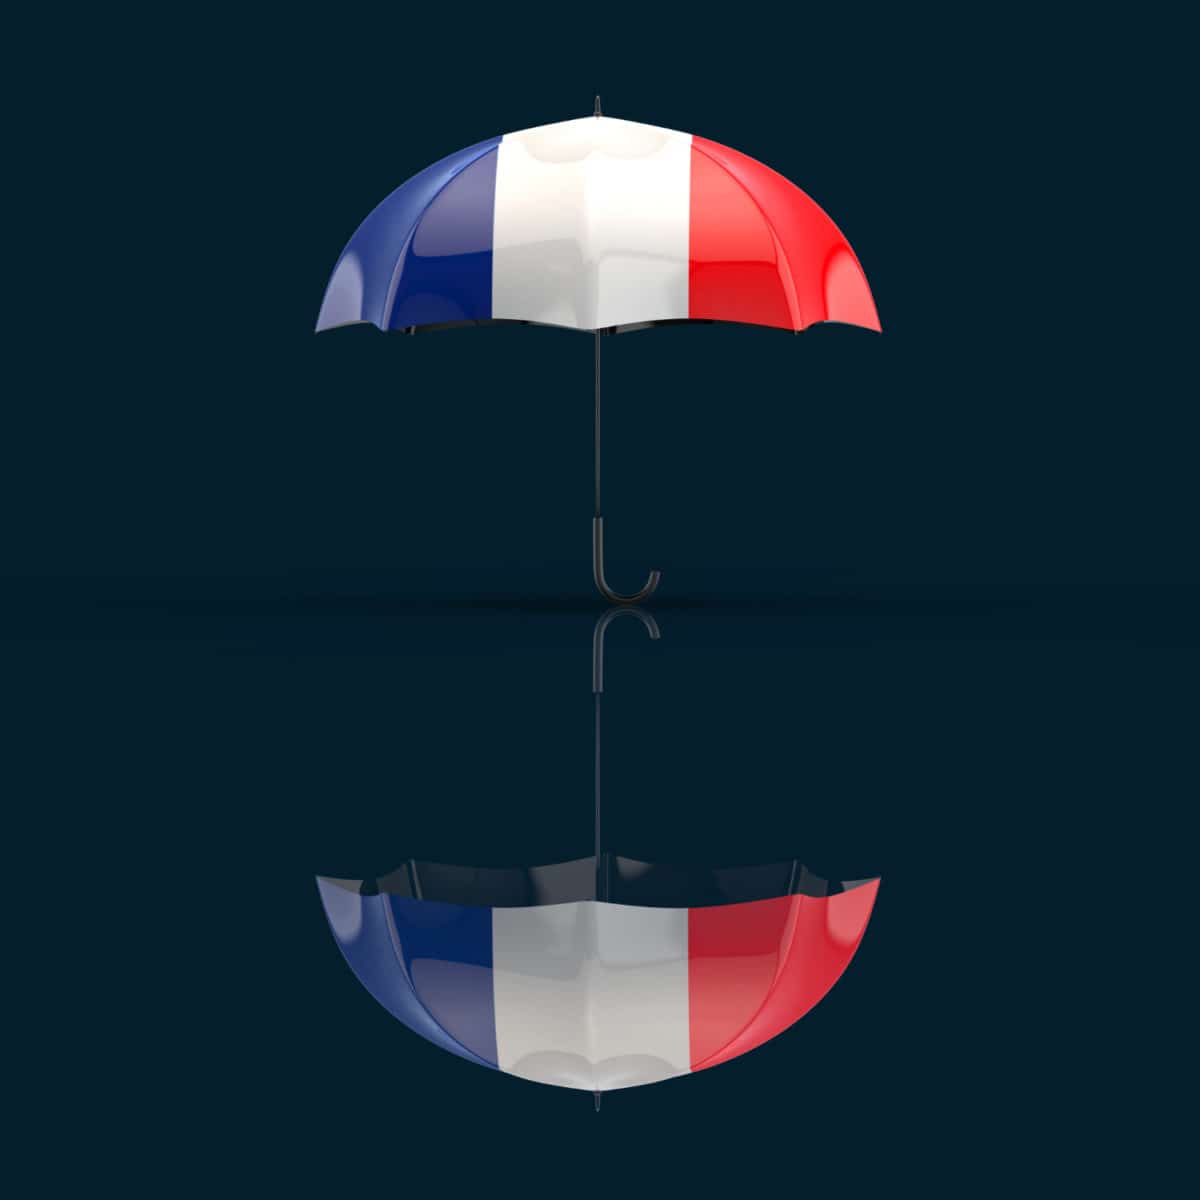 Acheter un parapluie made in France